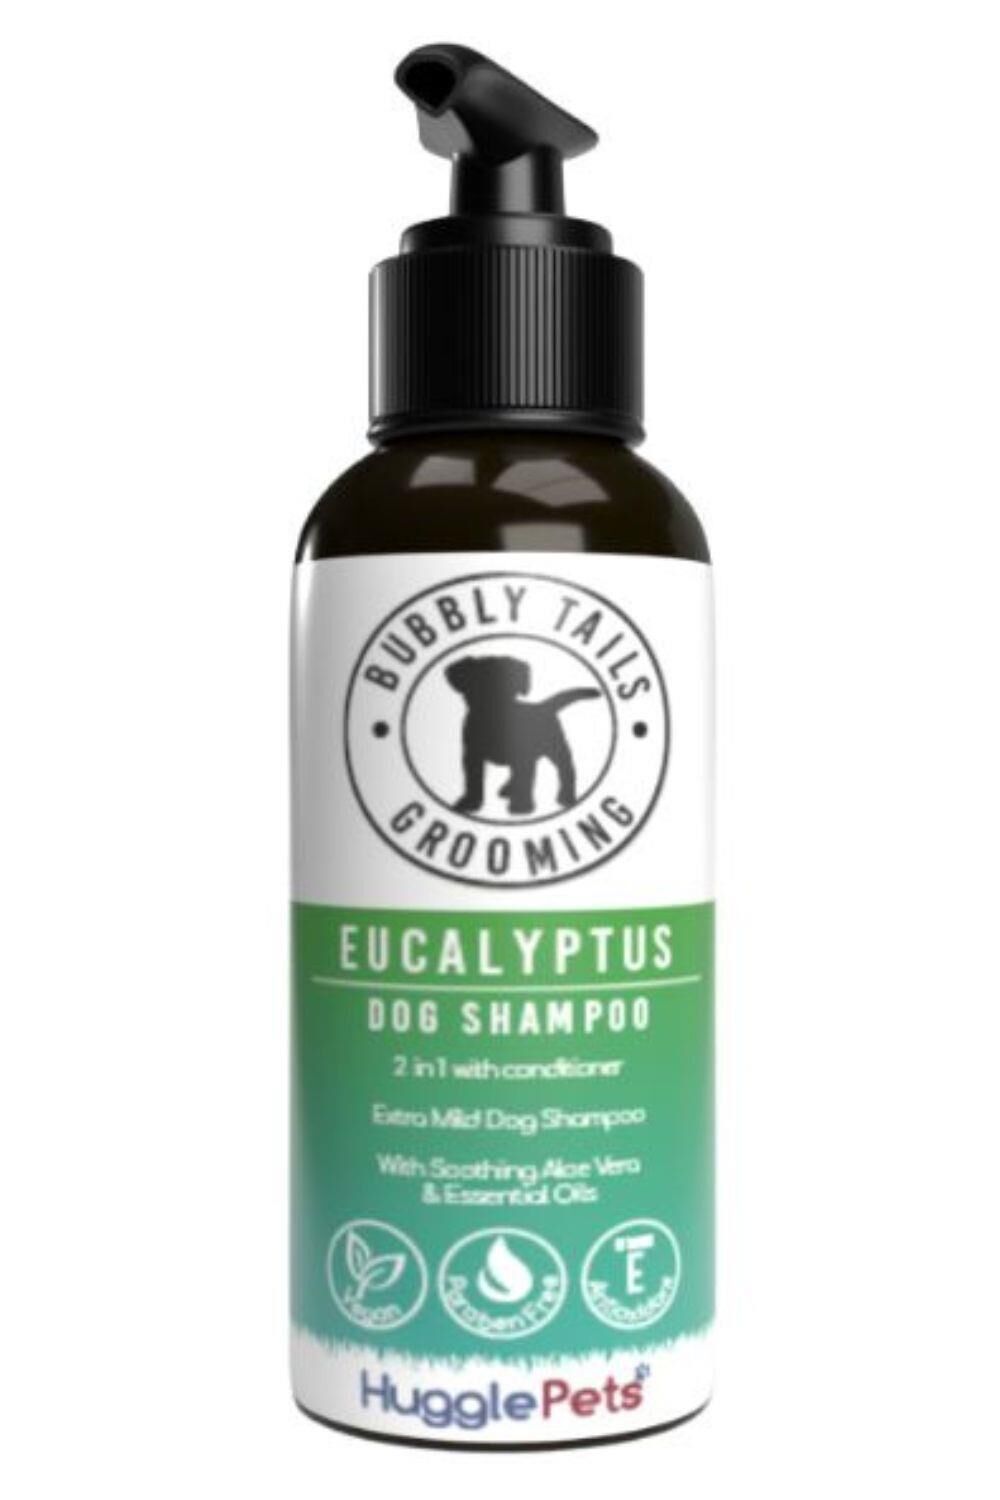 HUGGLEPETS HugglePets Bubbly Tails Eucalyptus 2 in 1 Dog Shampoo